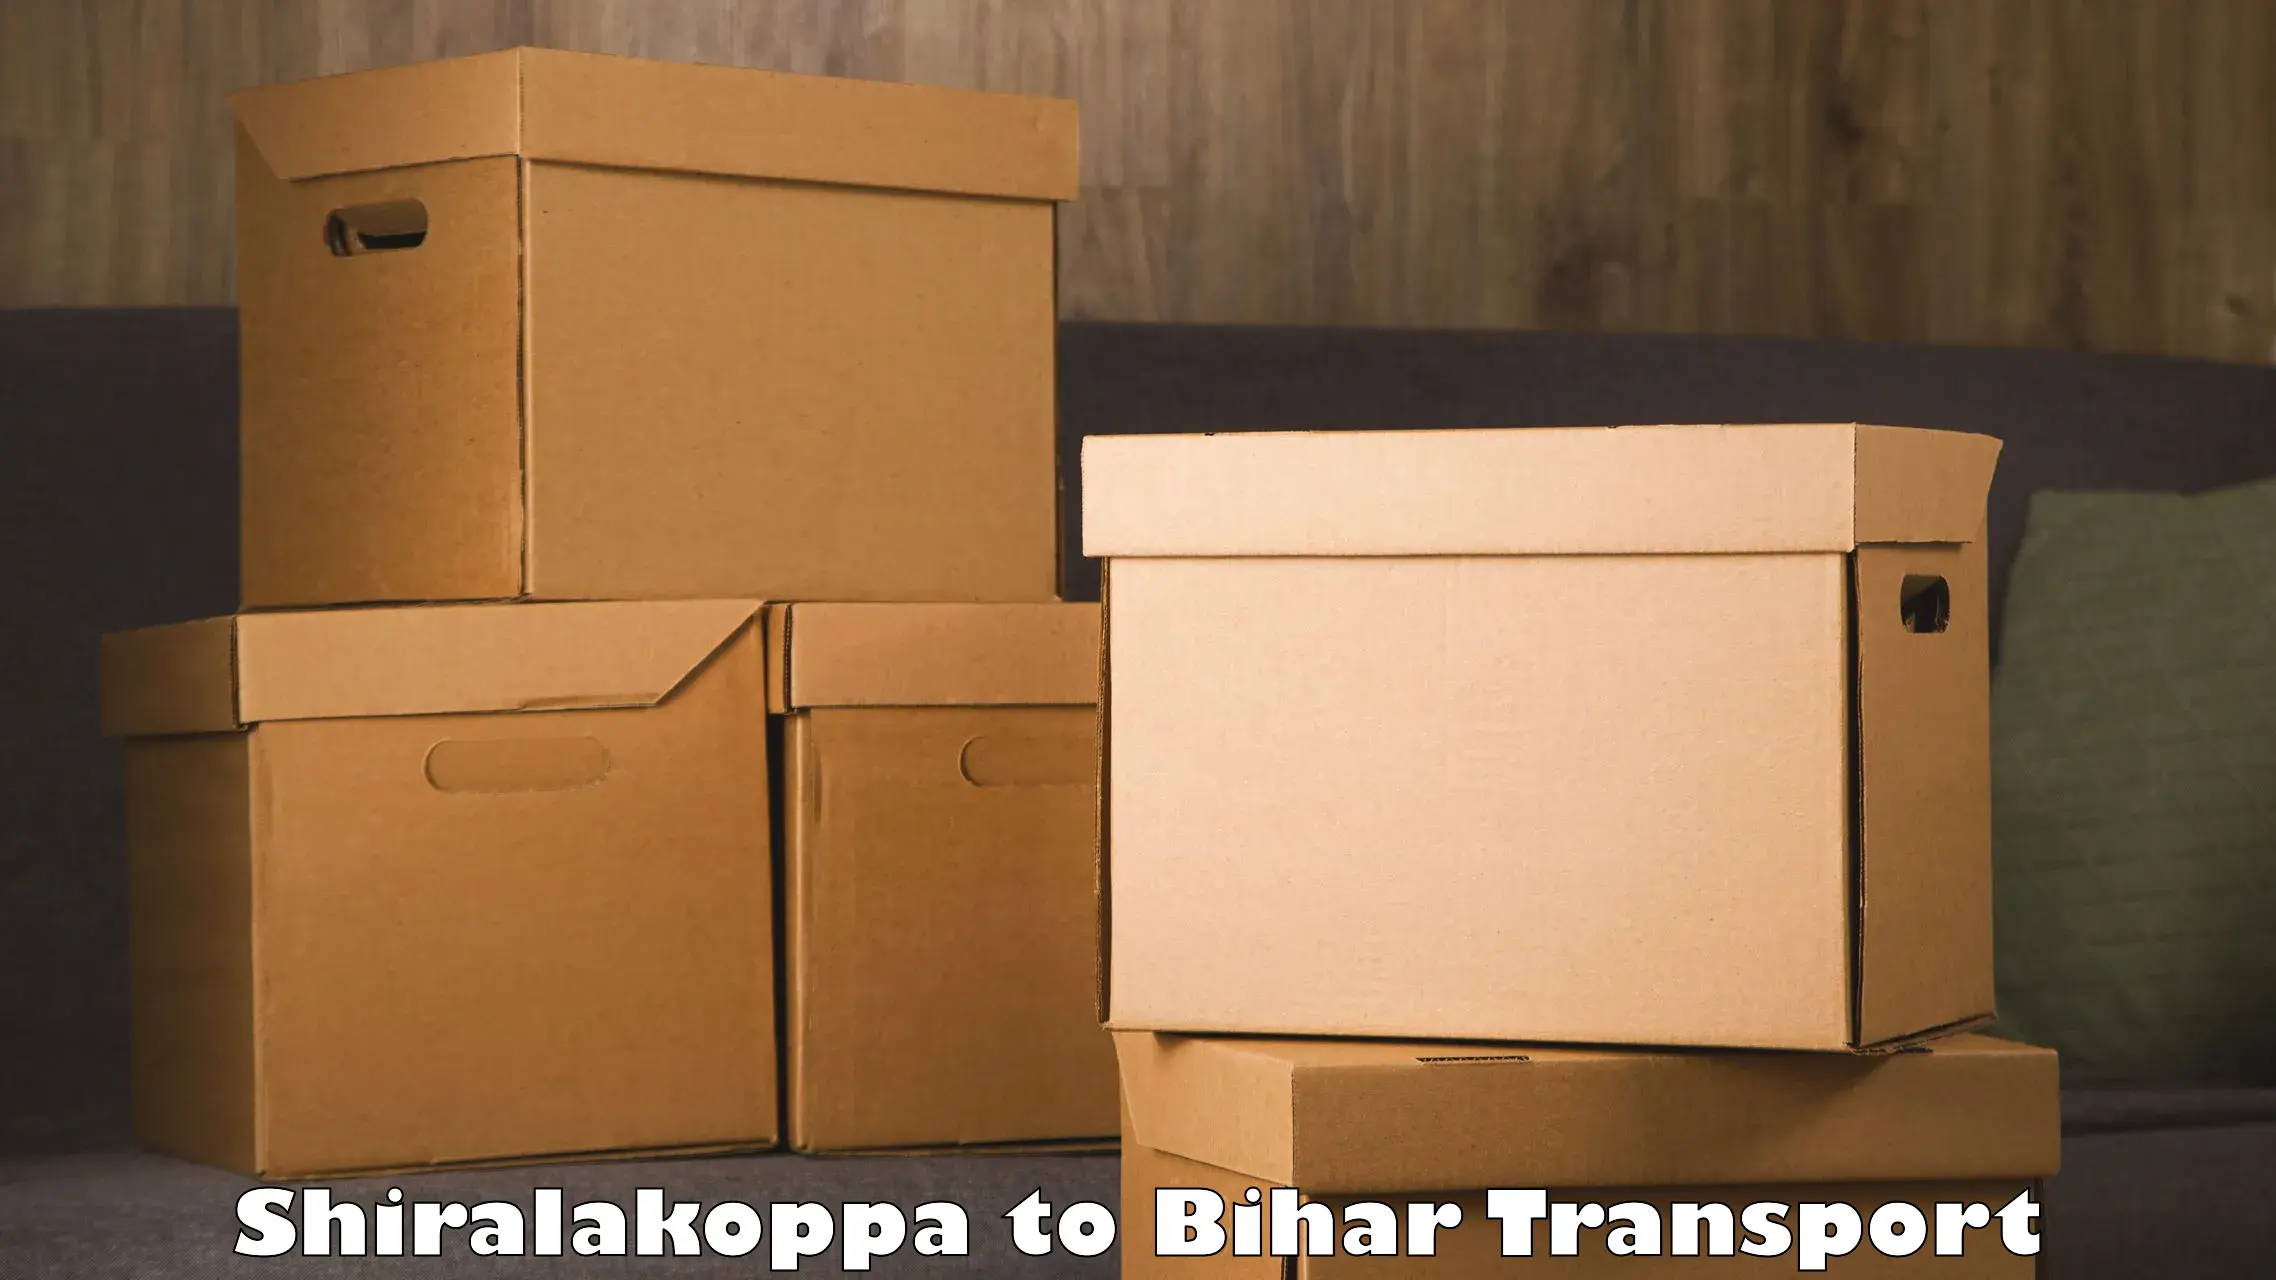 Nearby transport service Shiralakoppa to Banka